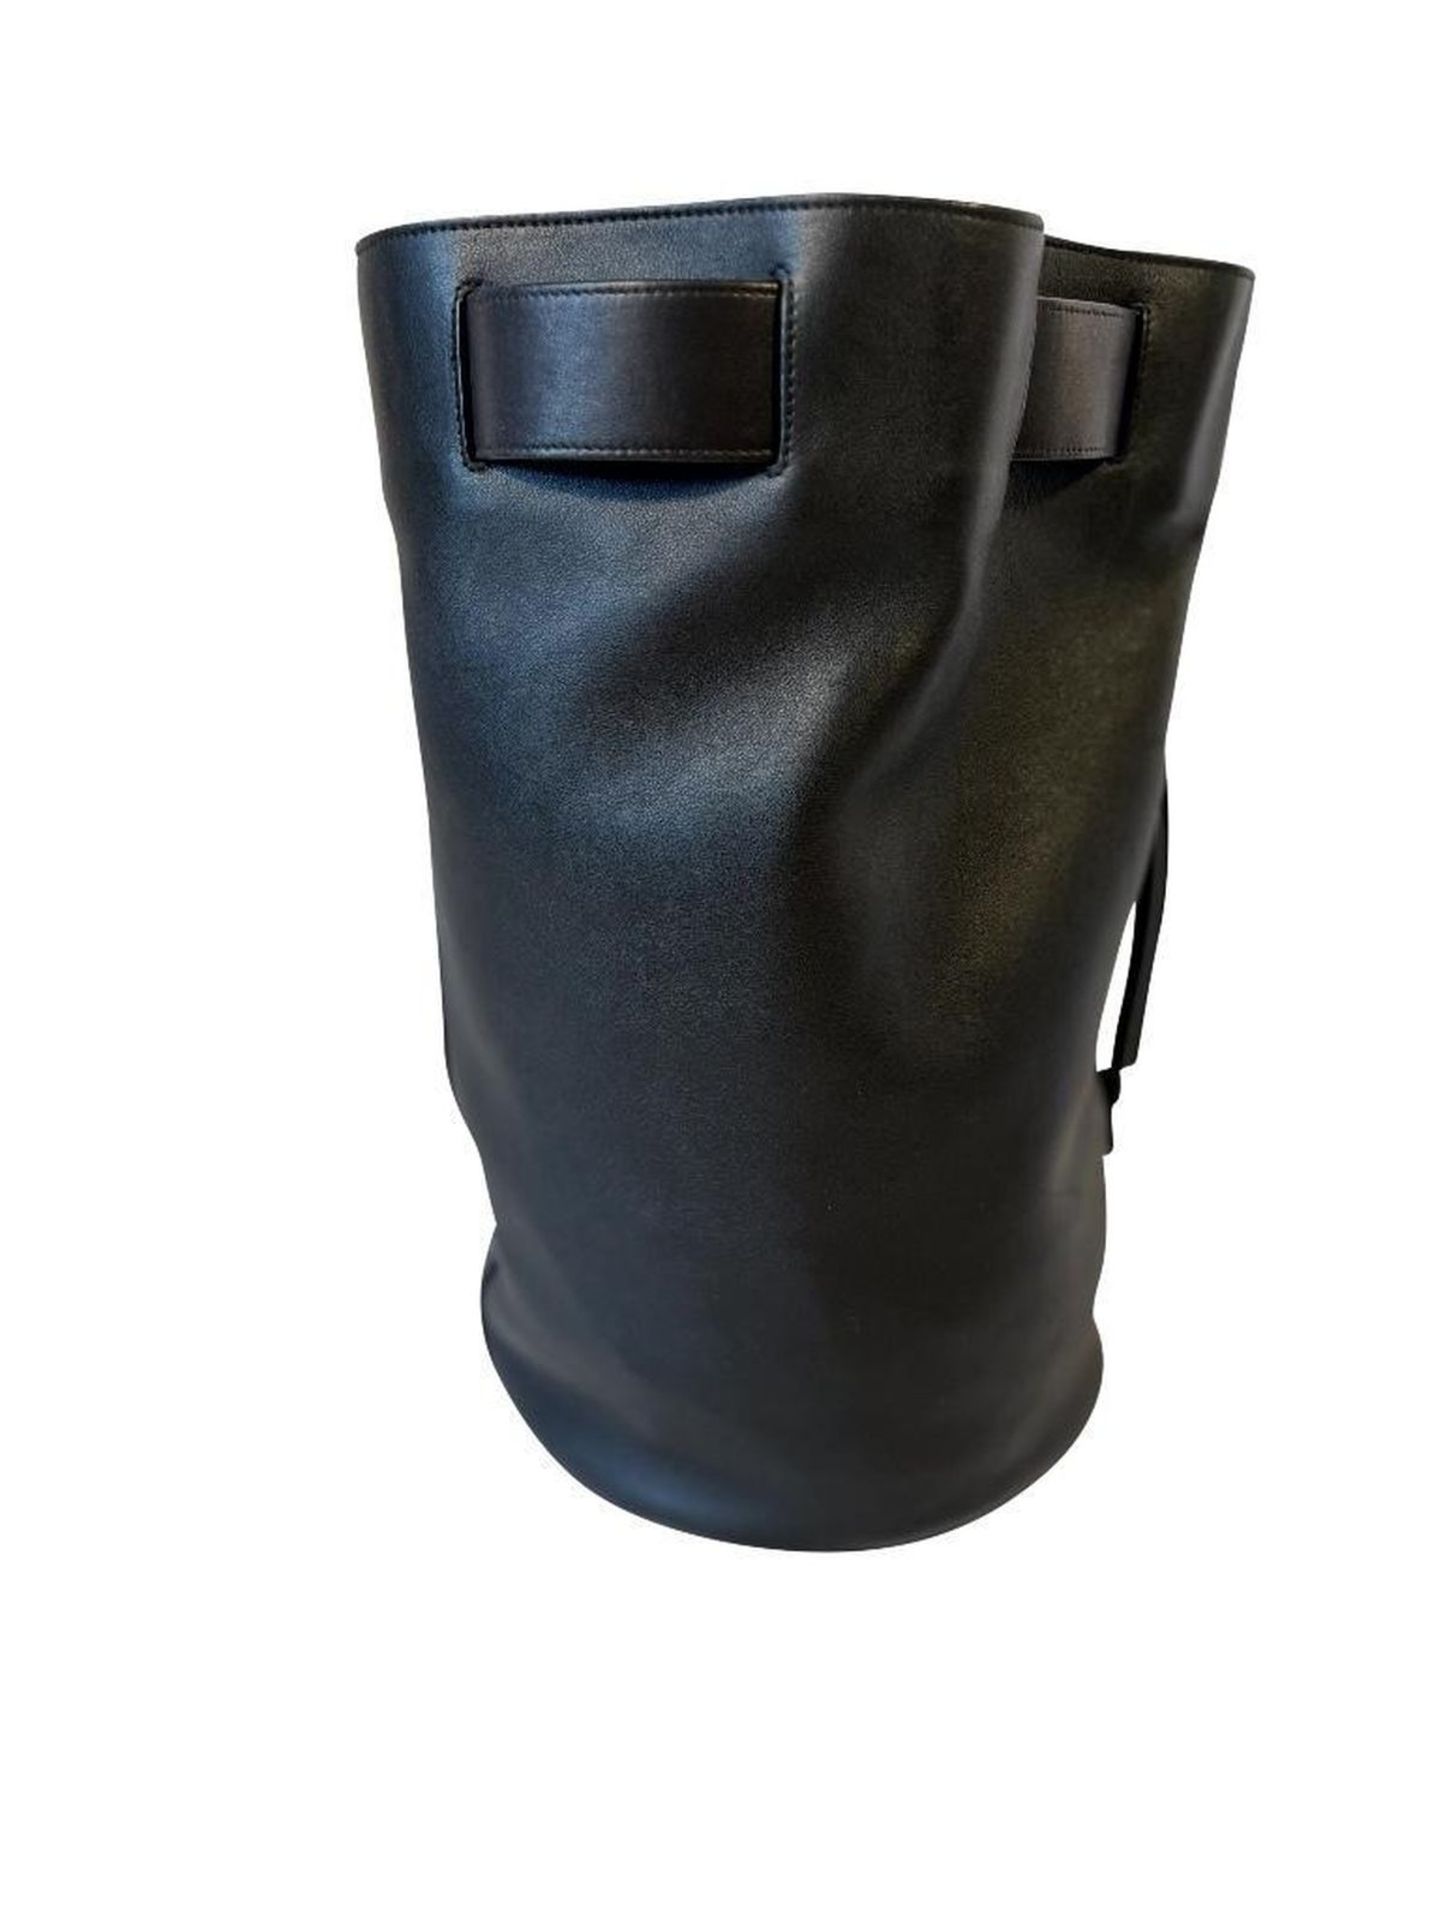 Byredo Leather Bag - Image 2 of 5